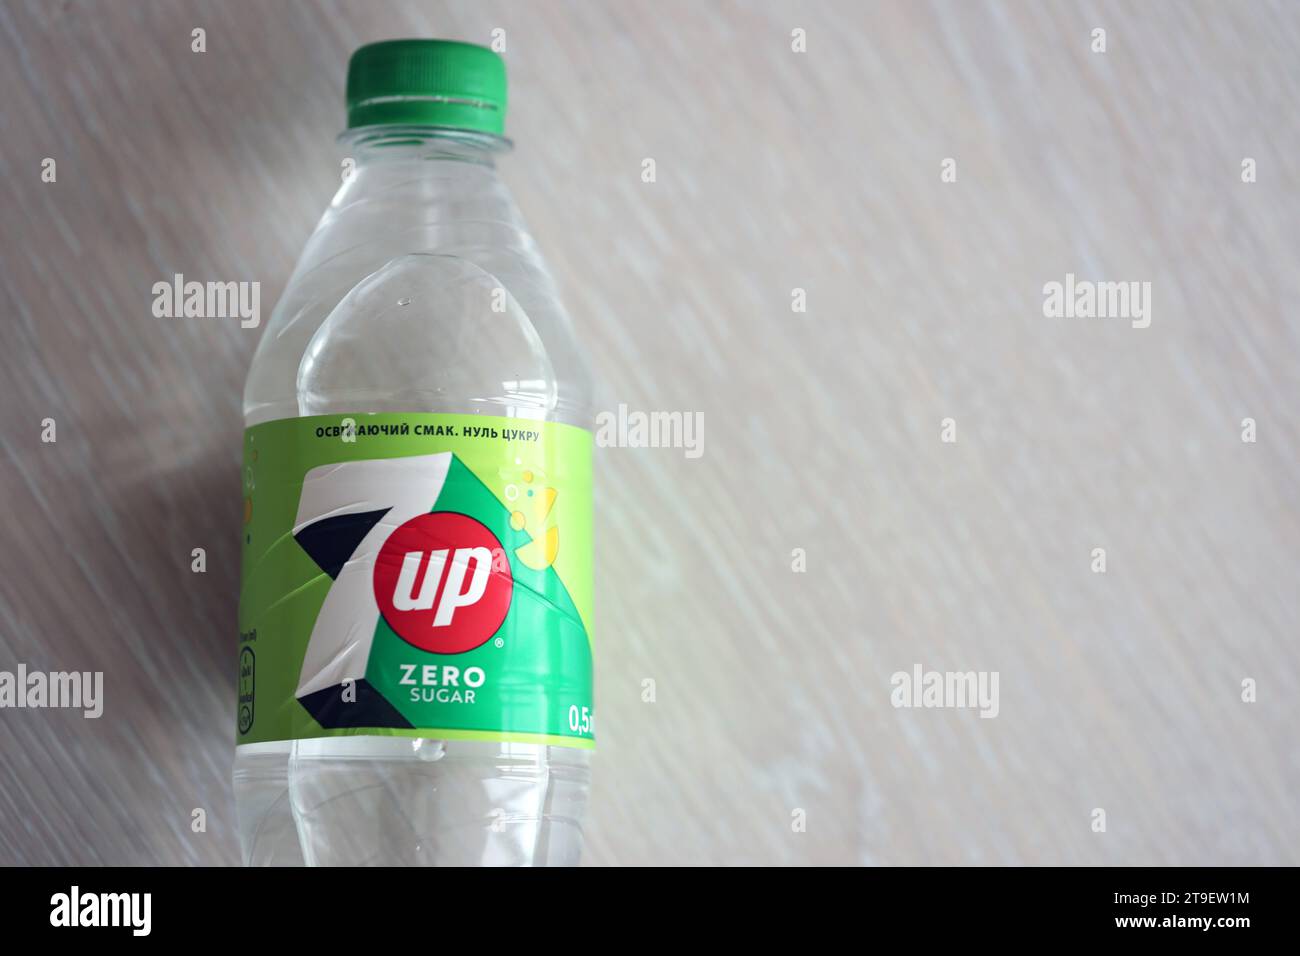 Seven Up 7-up Real Sugar Glass Bottle